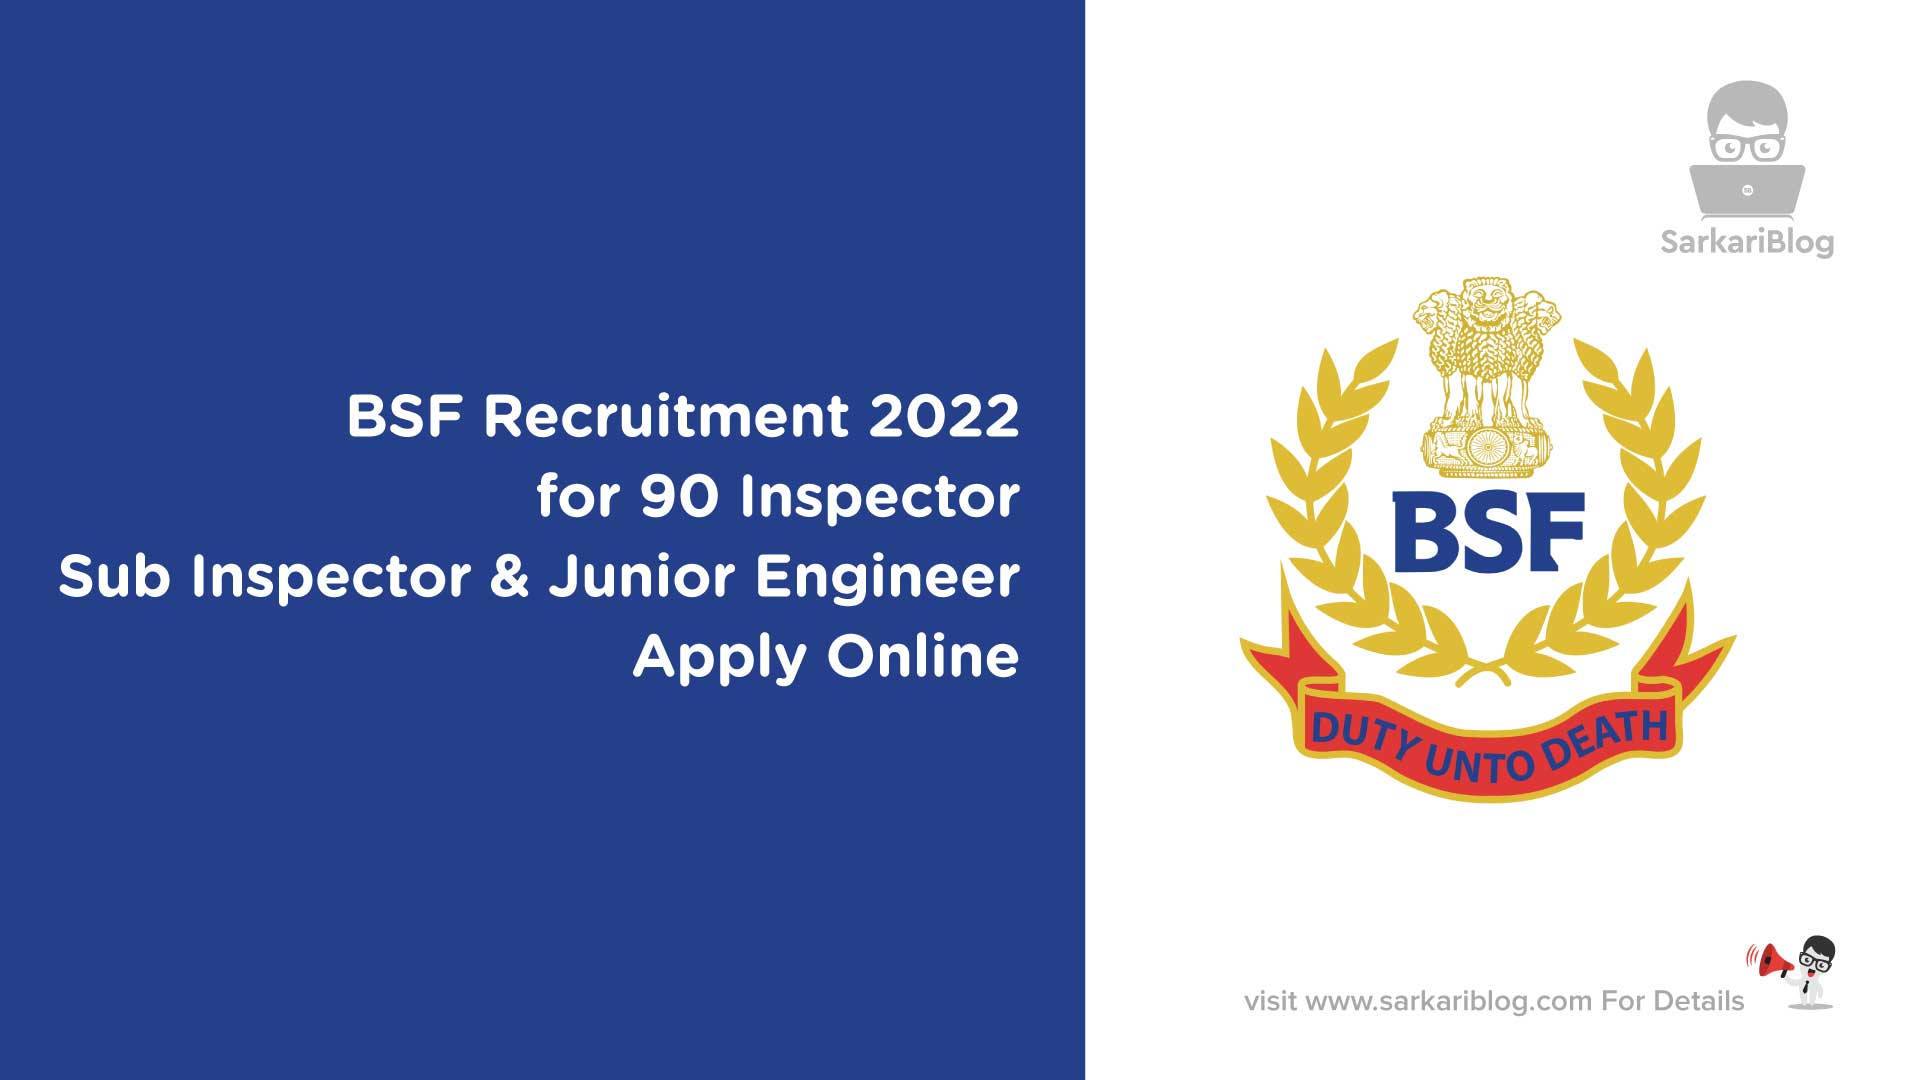 BSF Recruitment 2022 - for 90 Inspector, Sub Inspector & Junior Engineer Apply Online